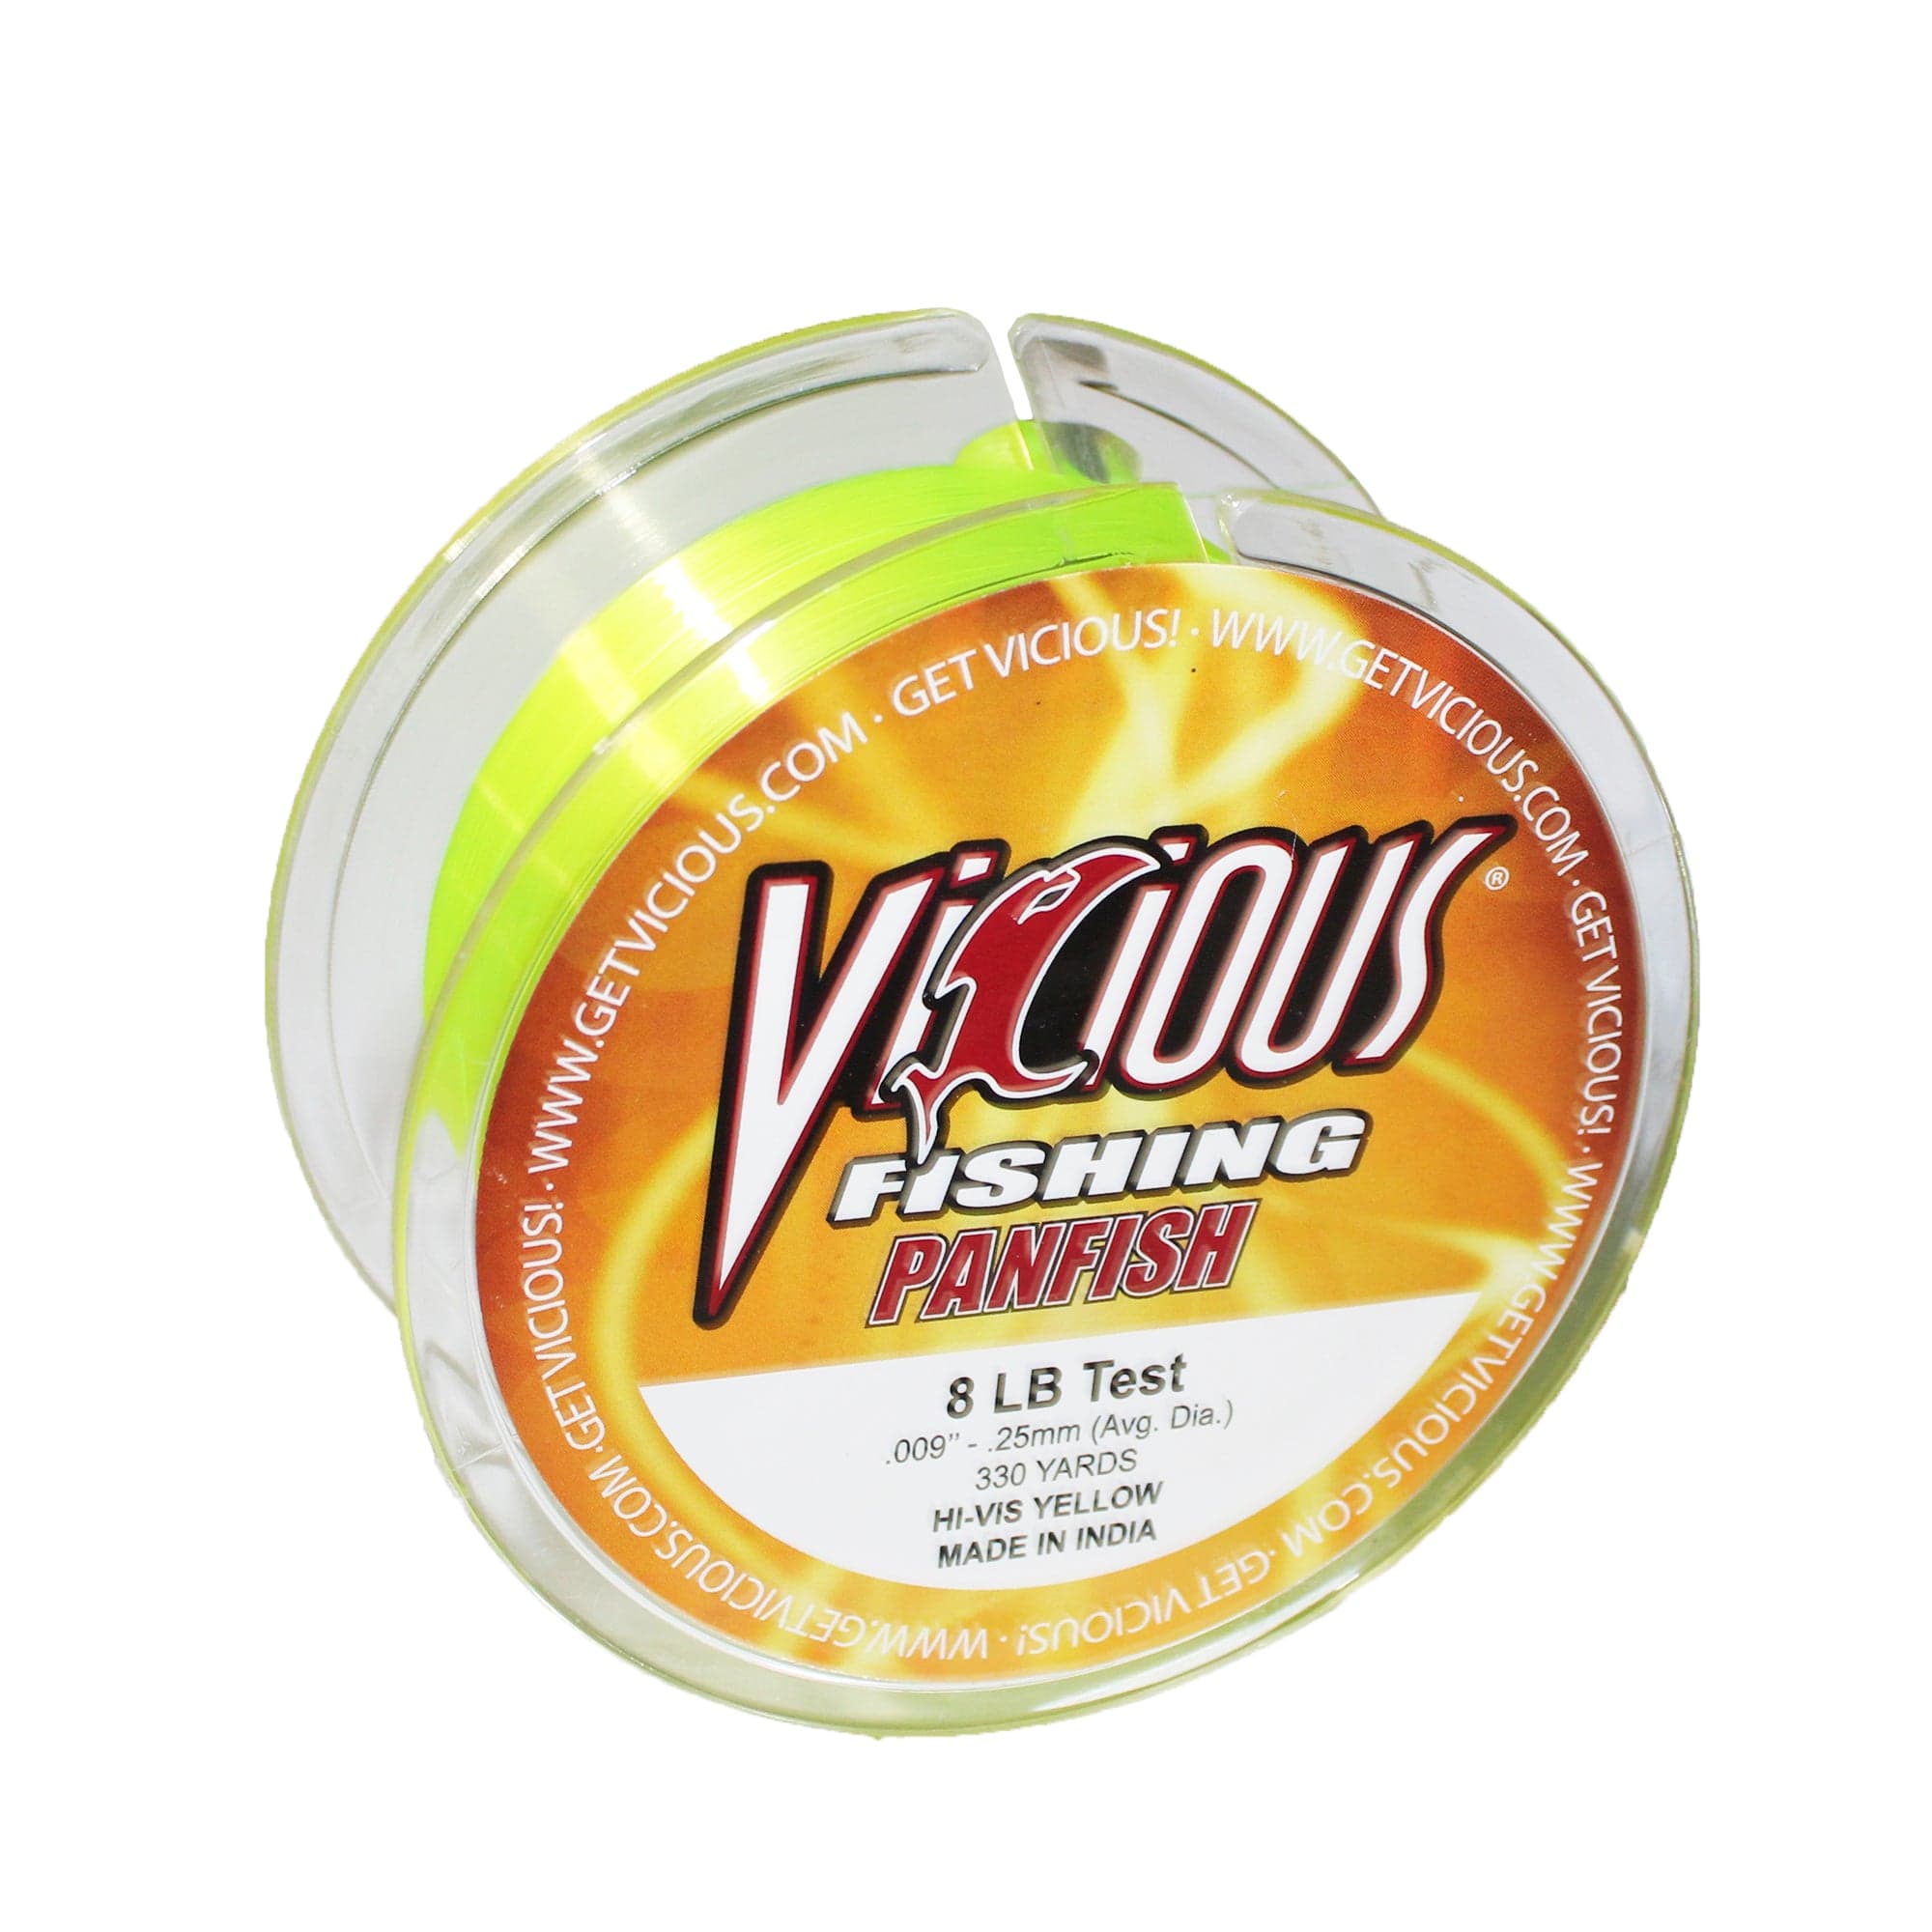 Vicious Fishing Panfish Mono Hi Vis Yellow Fishing Line - 330 Yards